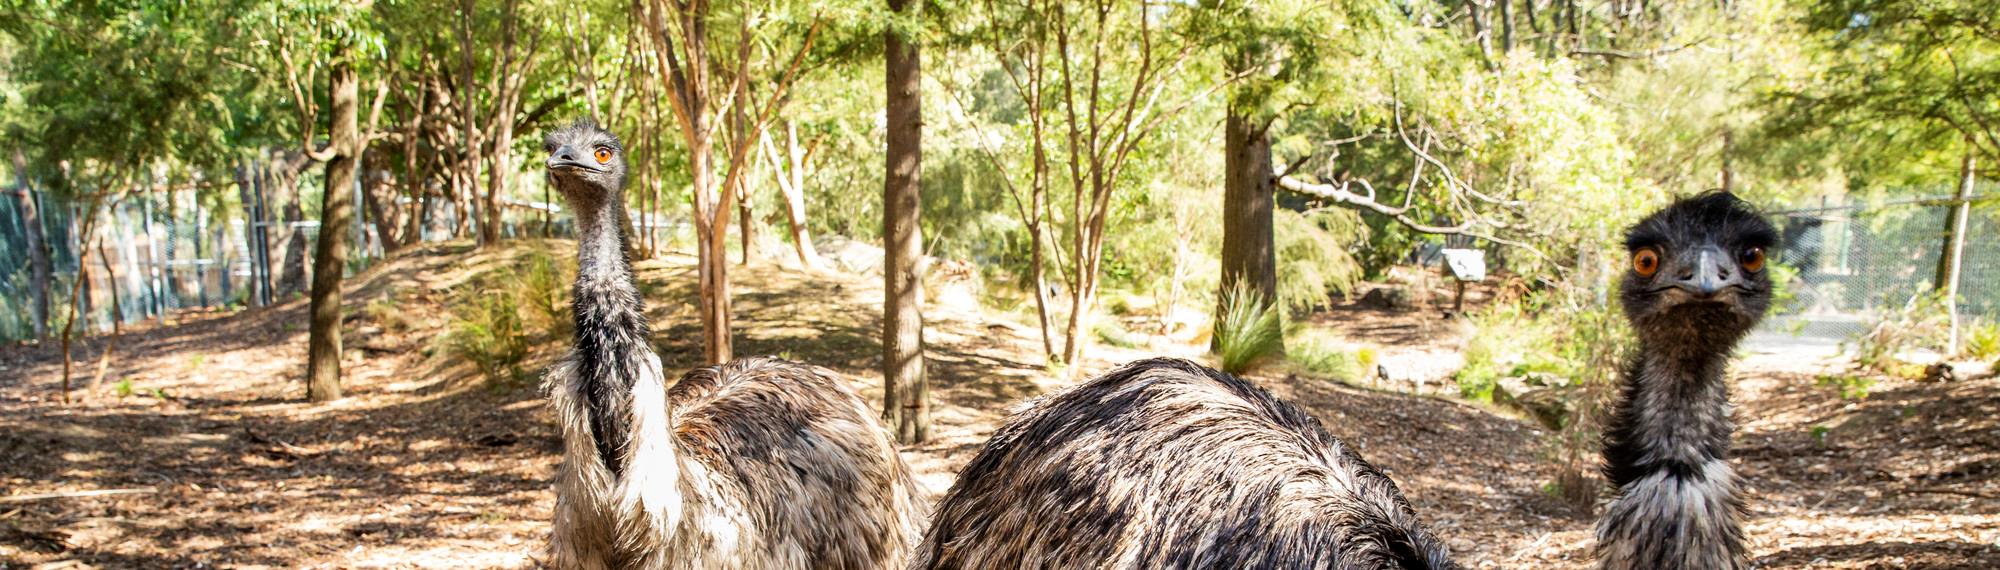 Two Emus, both looking toward the camera, against their Bush enclosure.